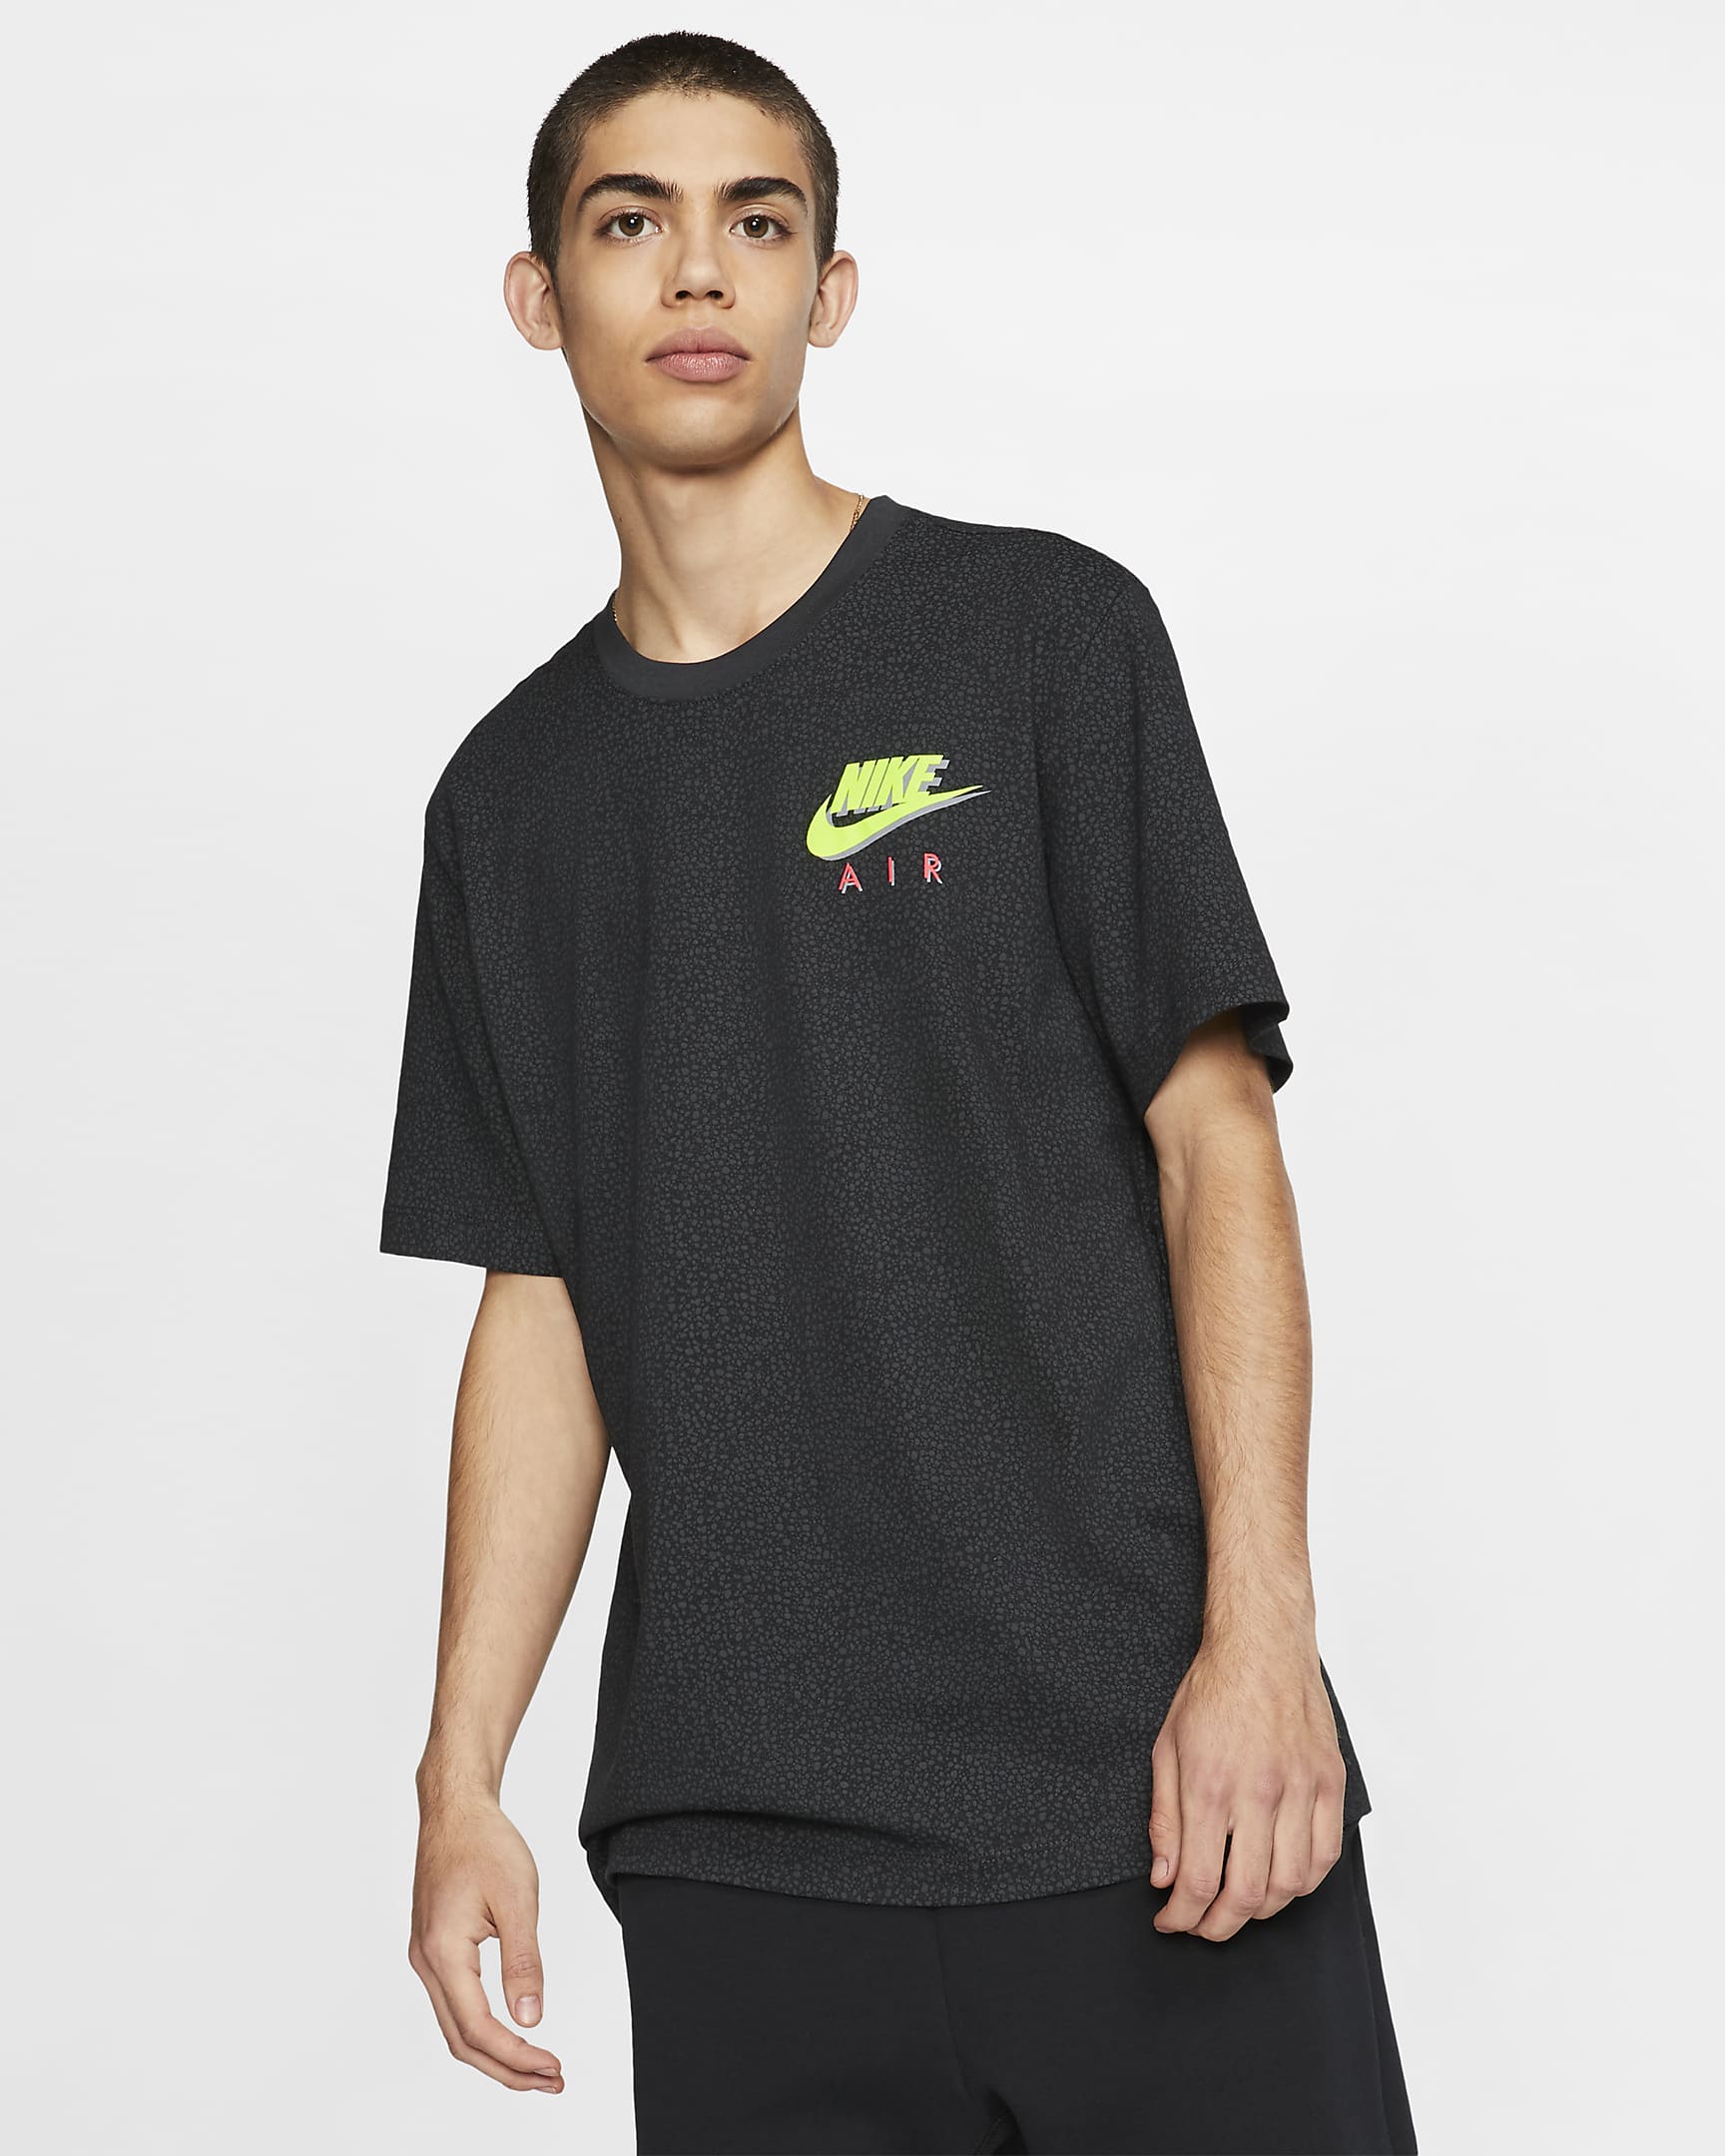 Nike Sportswear Men's Printed T-Shirt. Nike IL